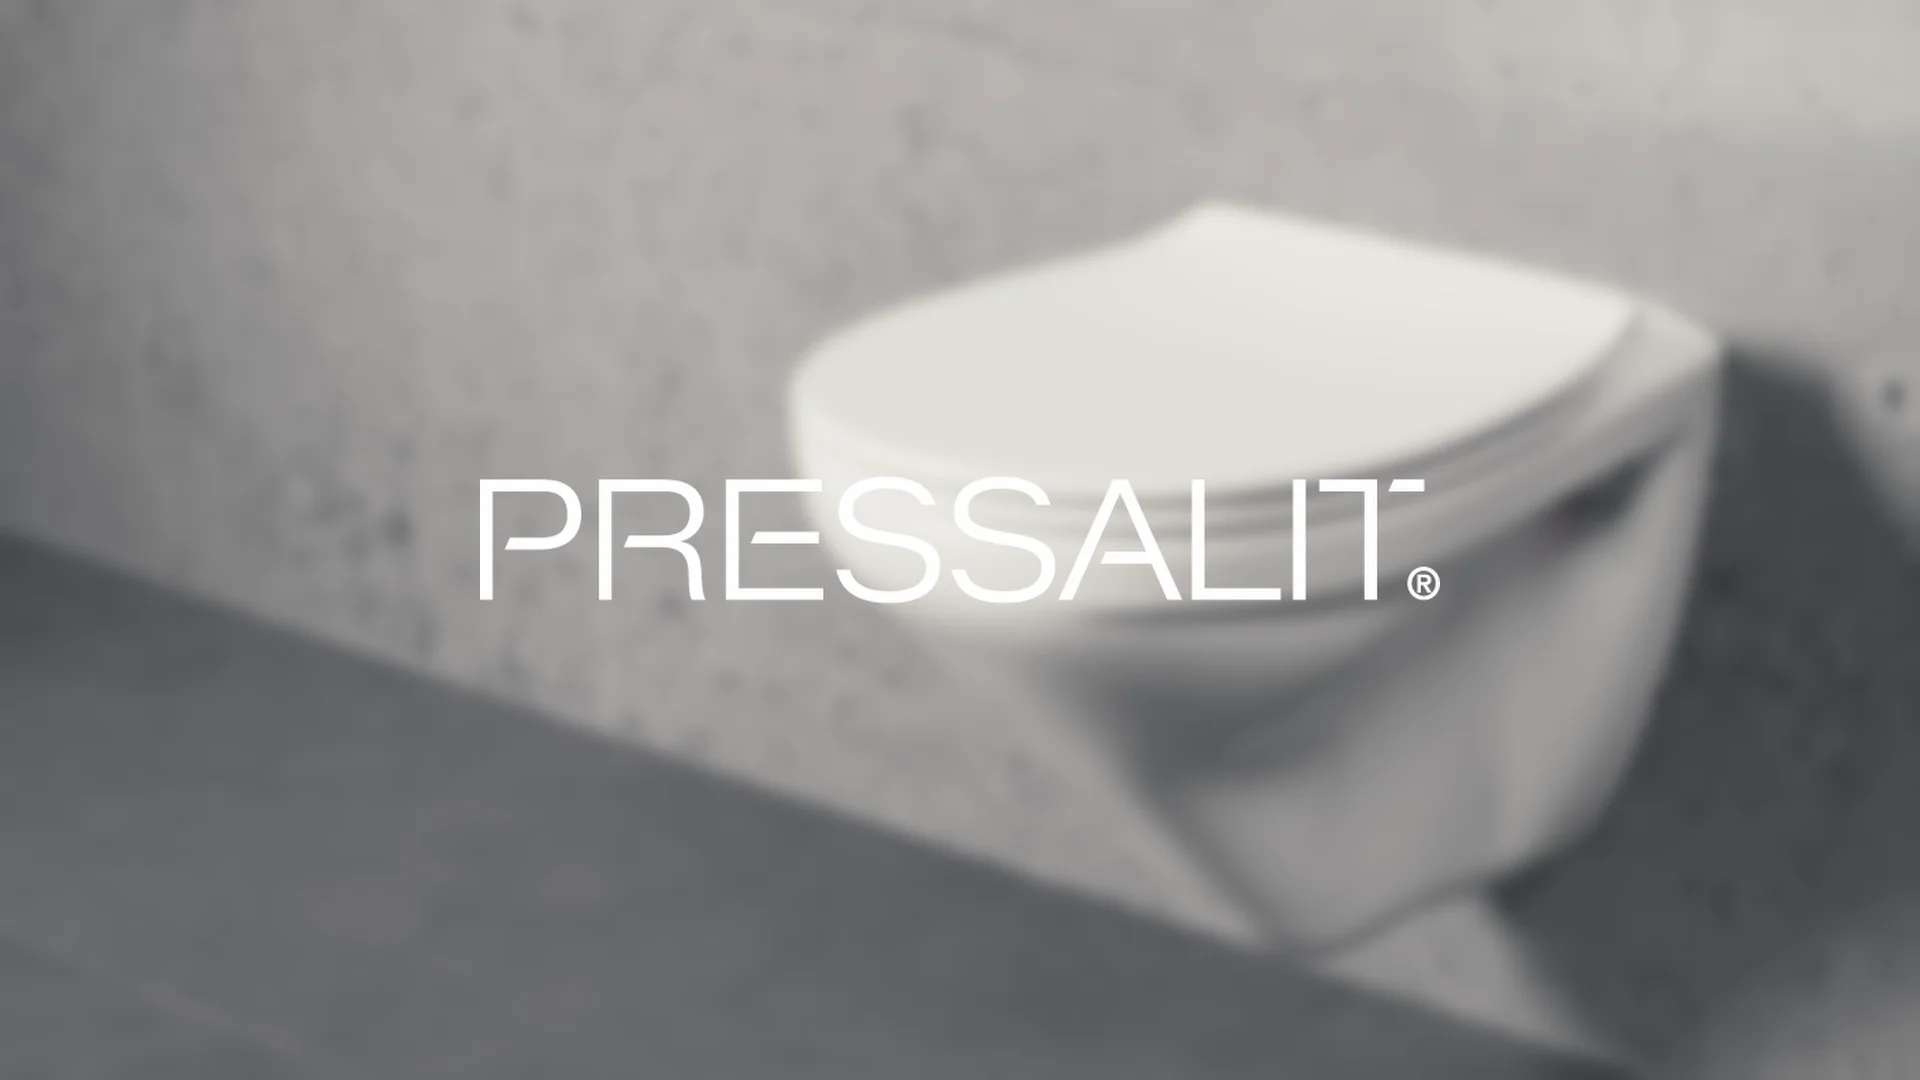 Pressalit mounting video 44 (toilet seat) on Vimeo